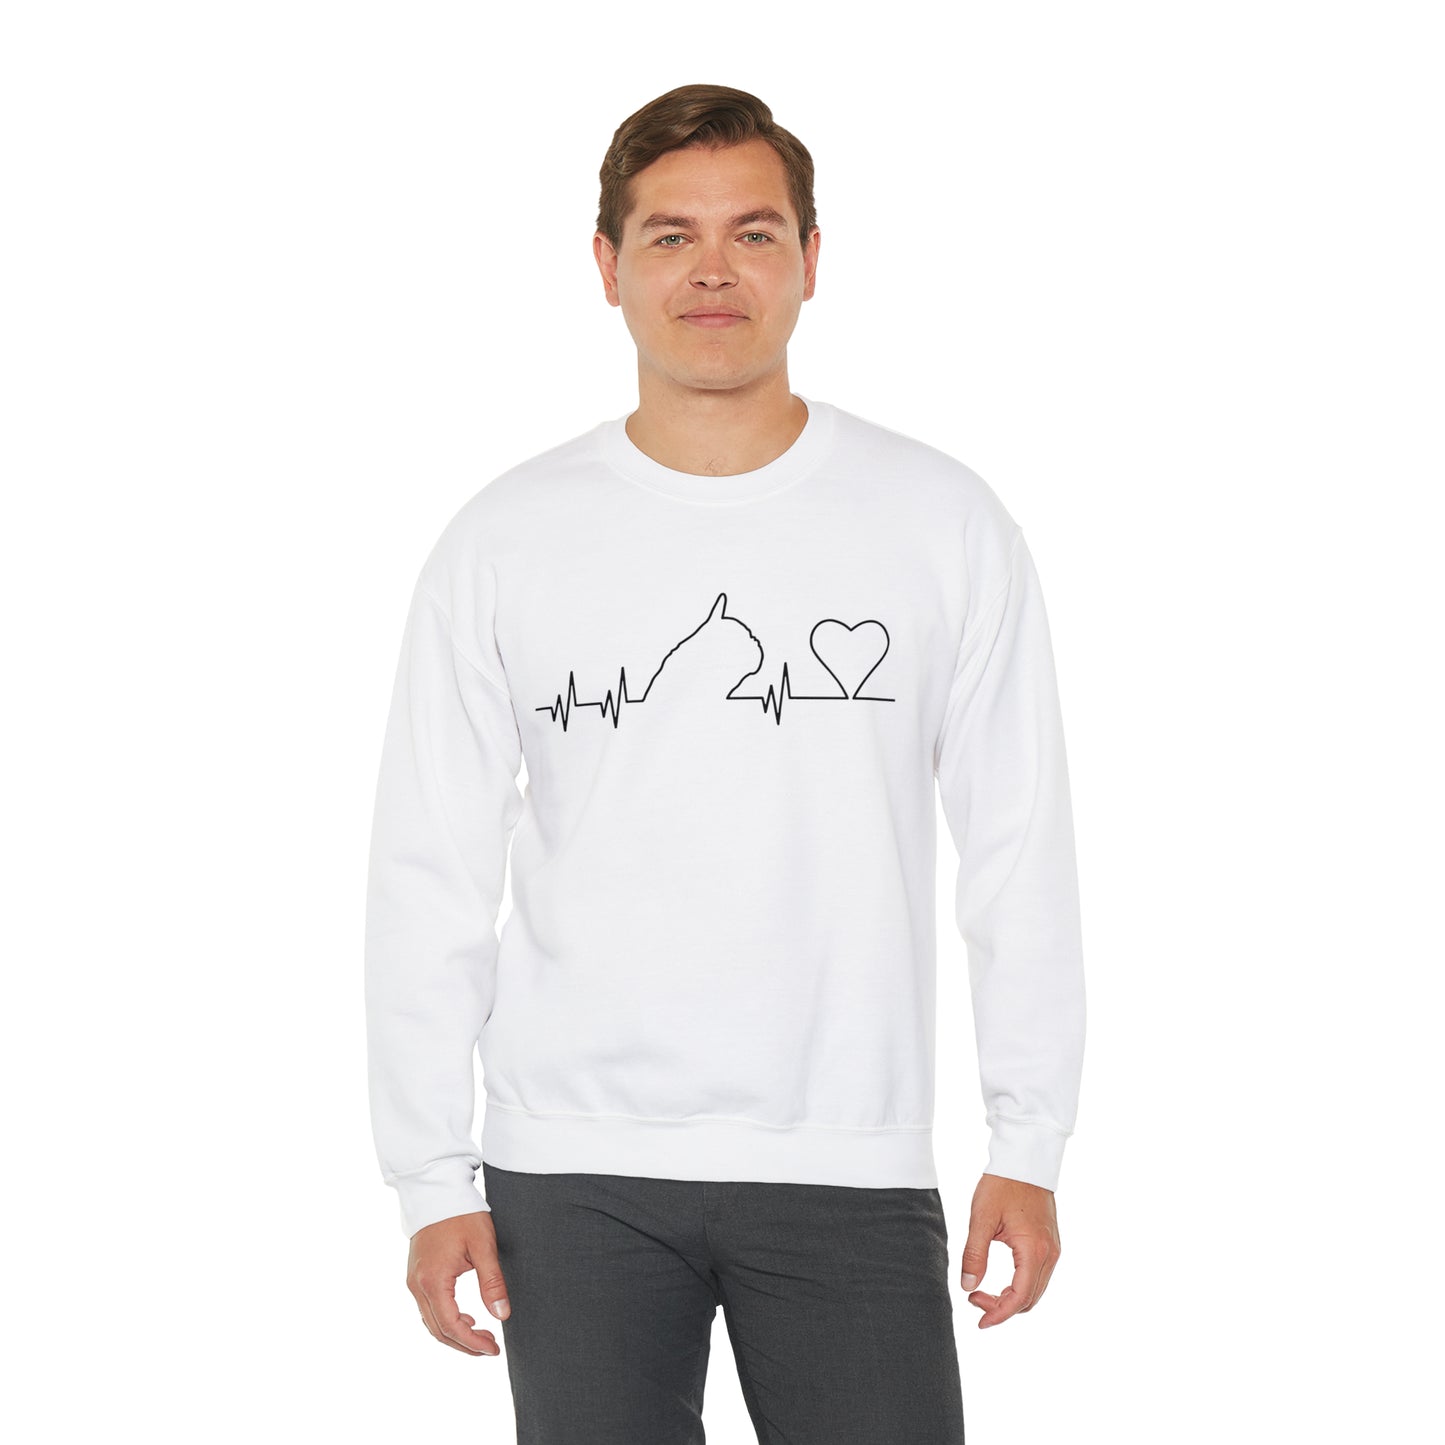 Frenchie ECG -  Unisex Sweatshirt